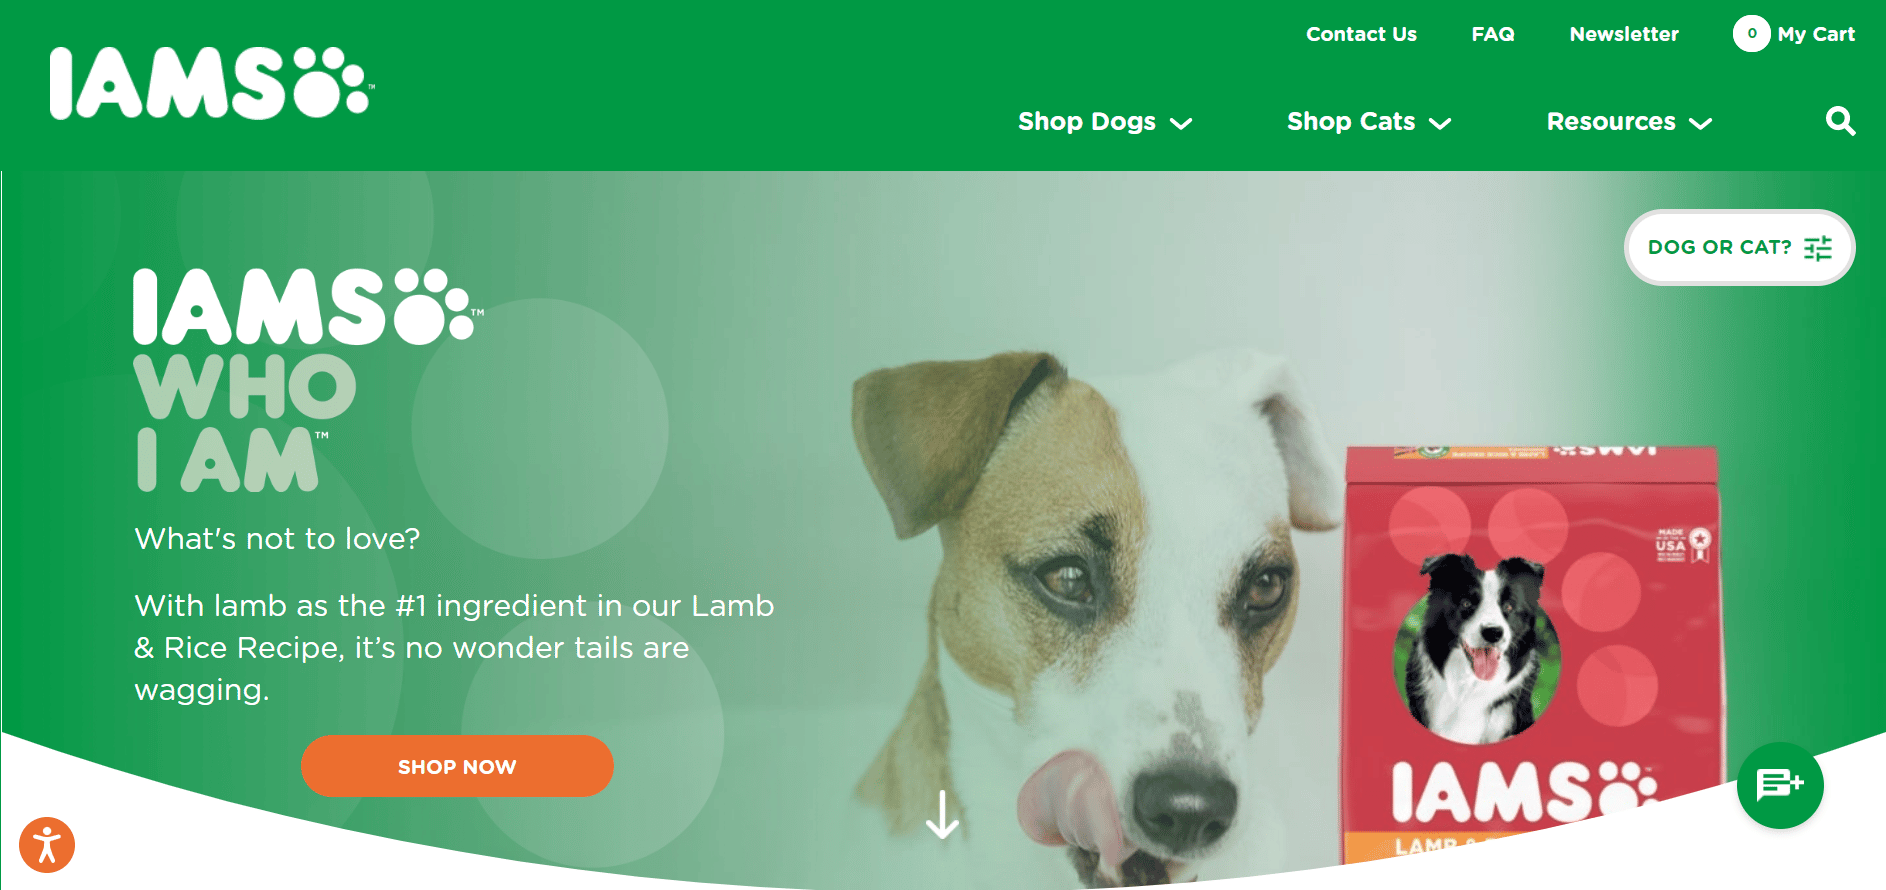 Official website of Iams pet brand